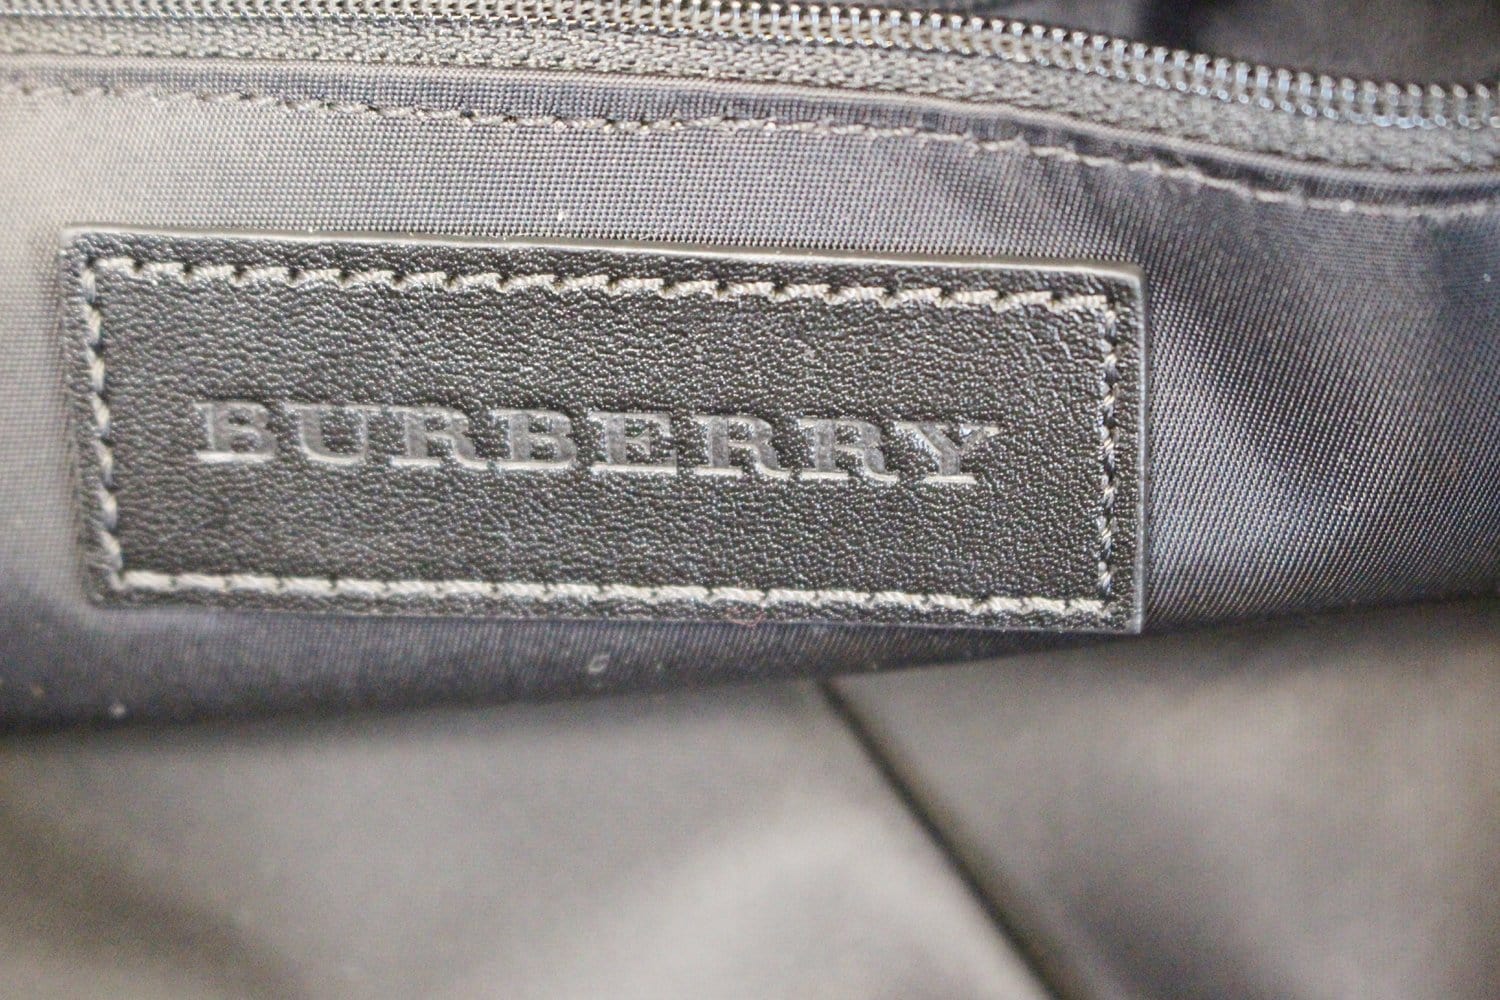 Burberry Buckleigh Packable Burgundy Nylon/Leather Tote Shoulder Bag TT2127